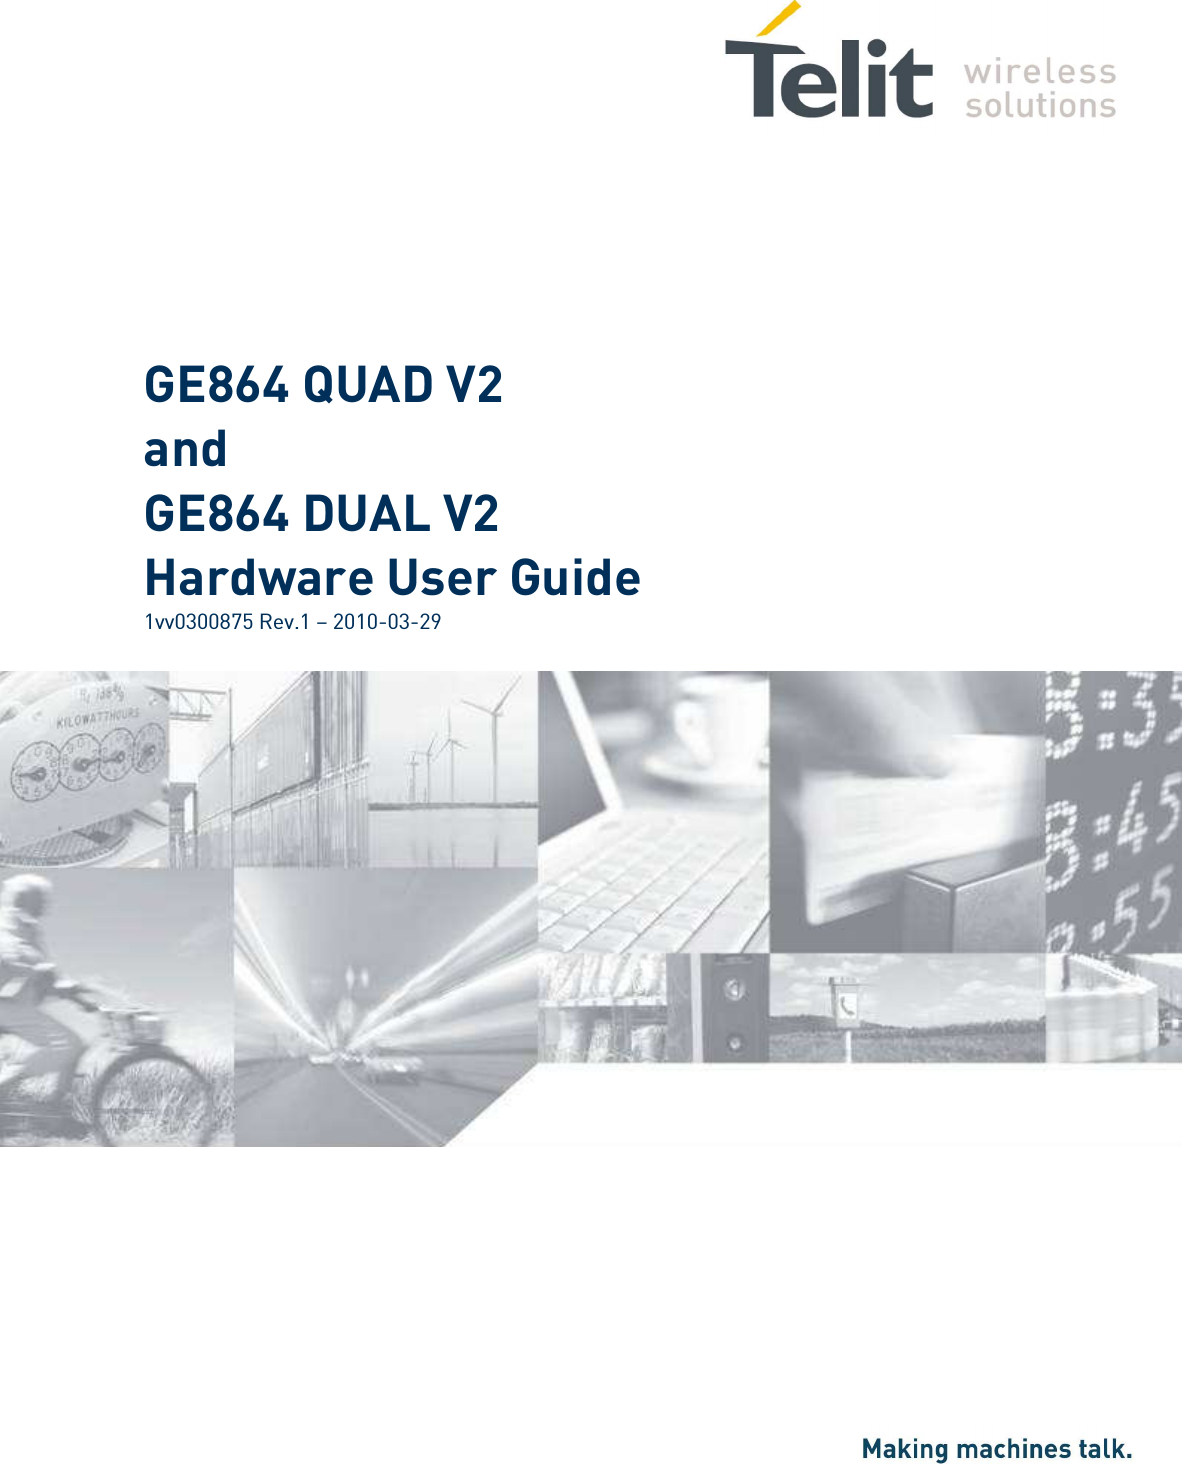                   GE864 QUAD V2  and  GE864 DUAL V2  Hardware User Guide 1vv0300875 Rev.1 – 2010-03-29 